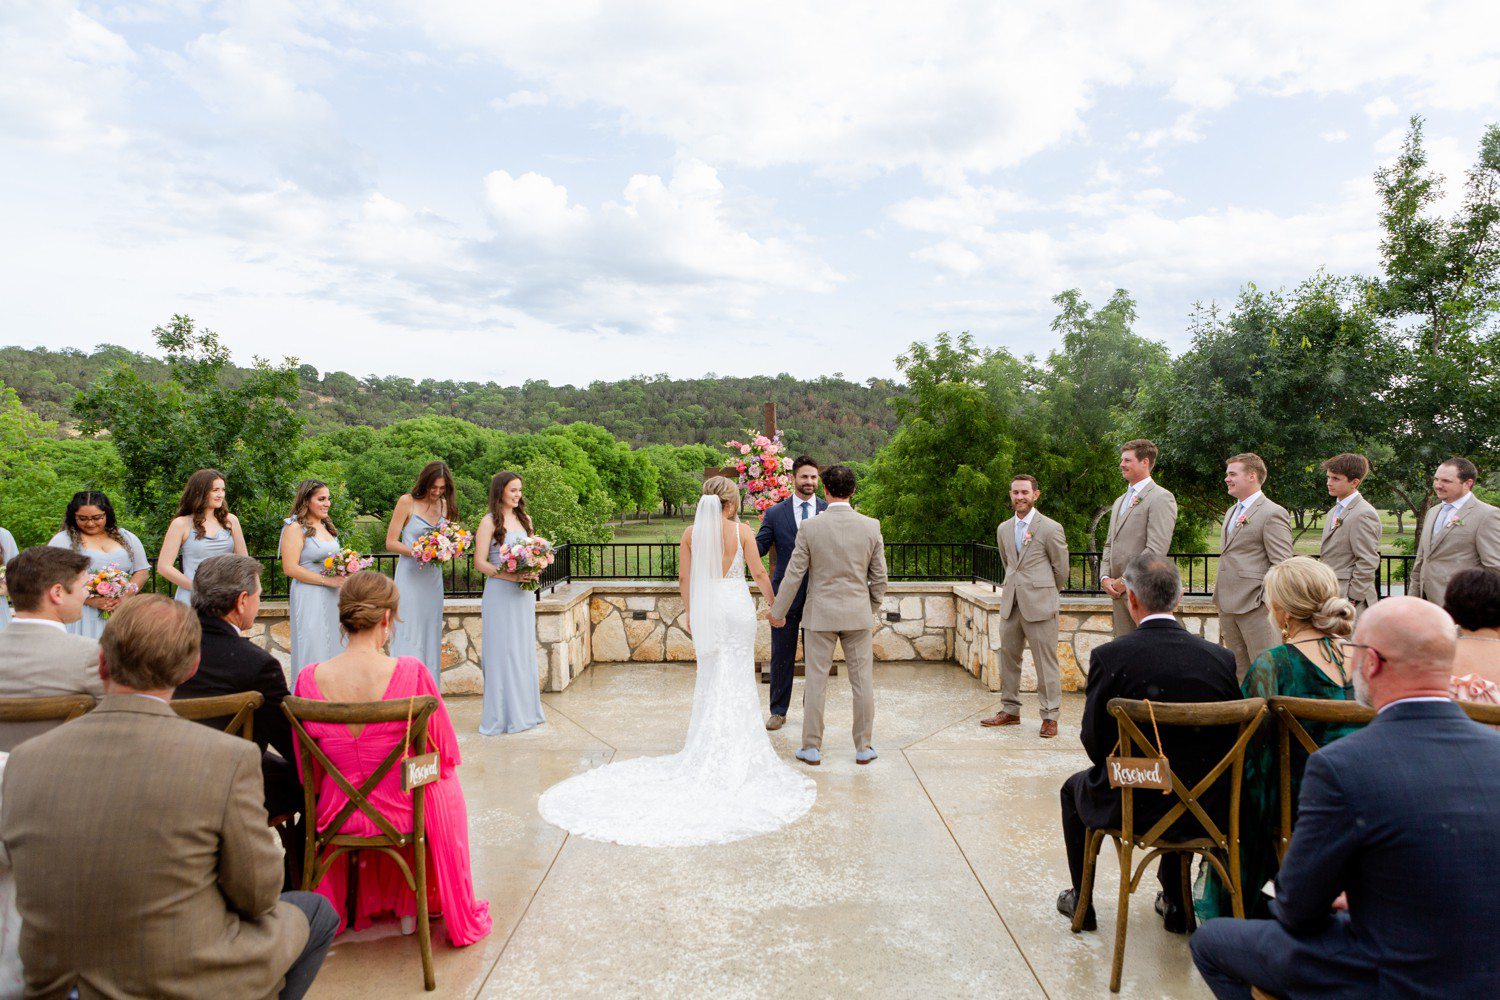 Hil Country Wedding at Sendera Springs in Kerrville TX.